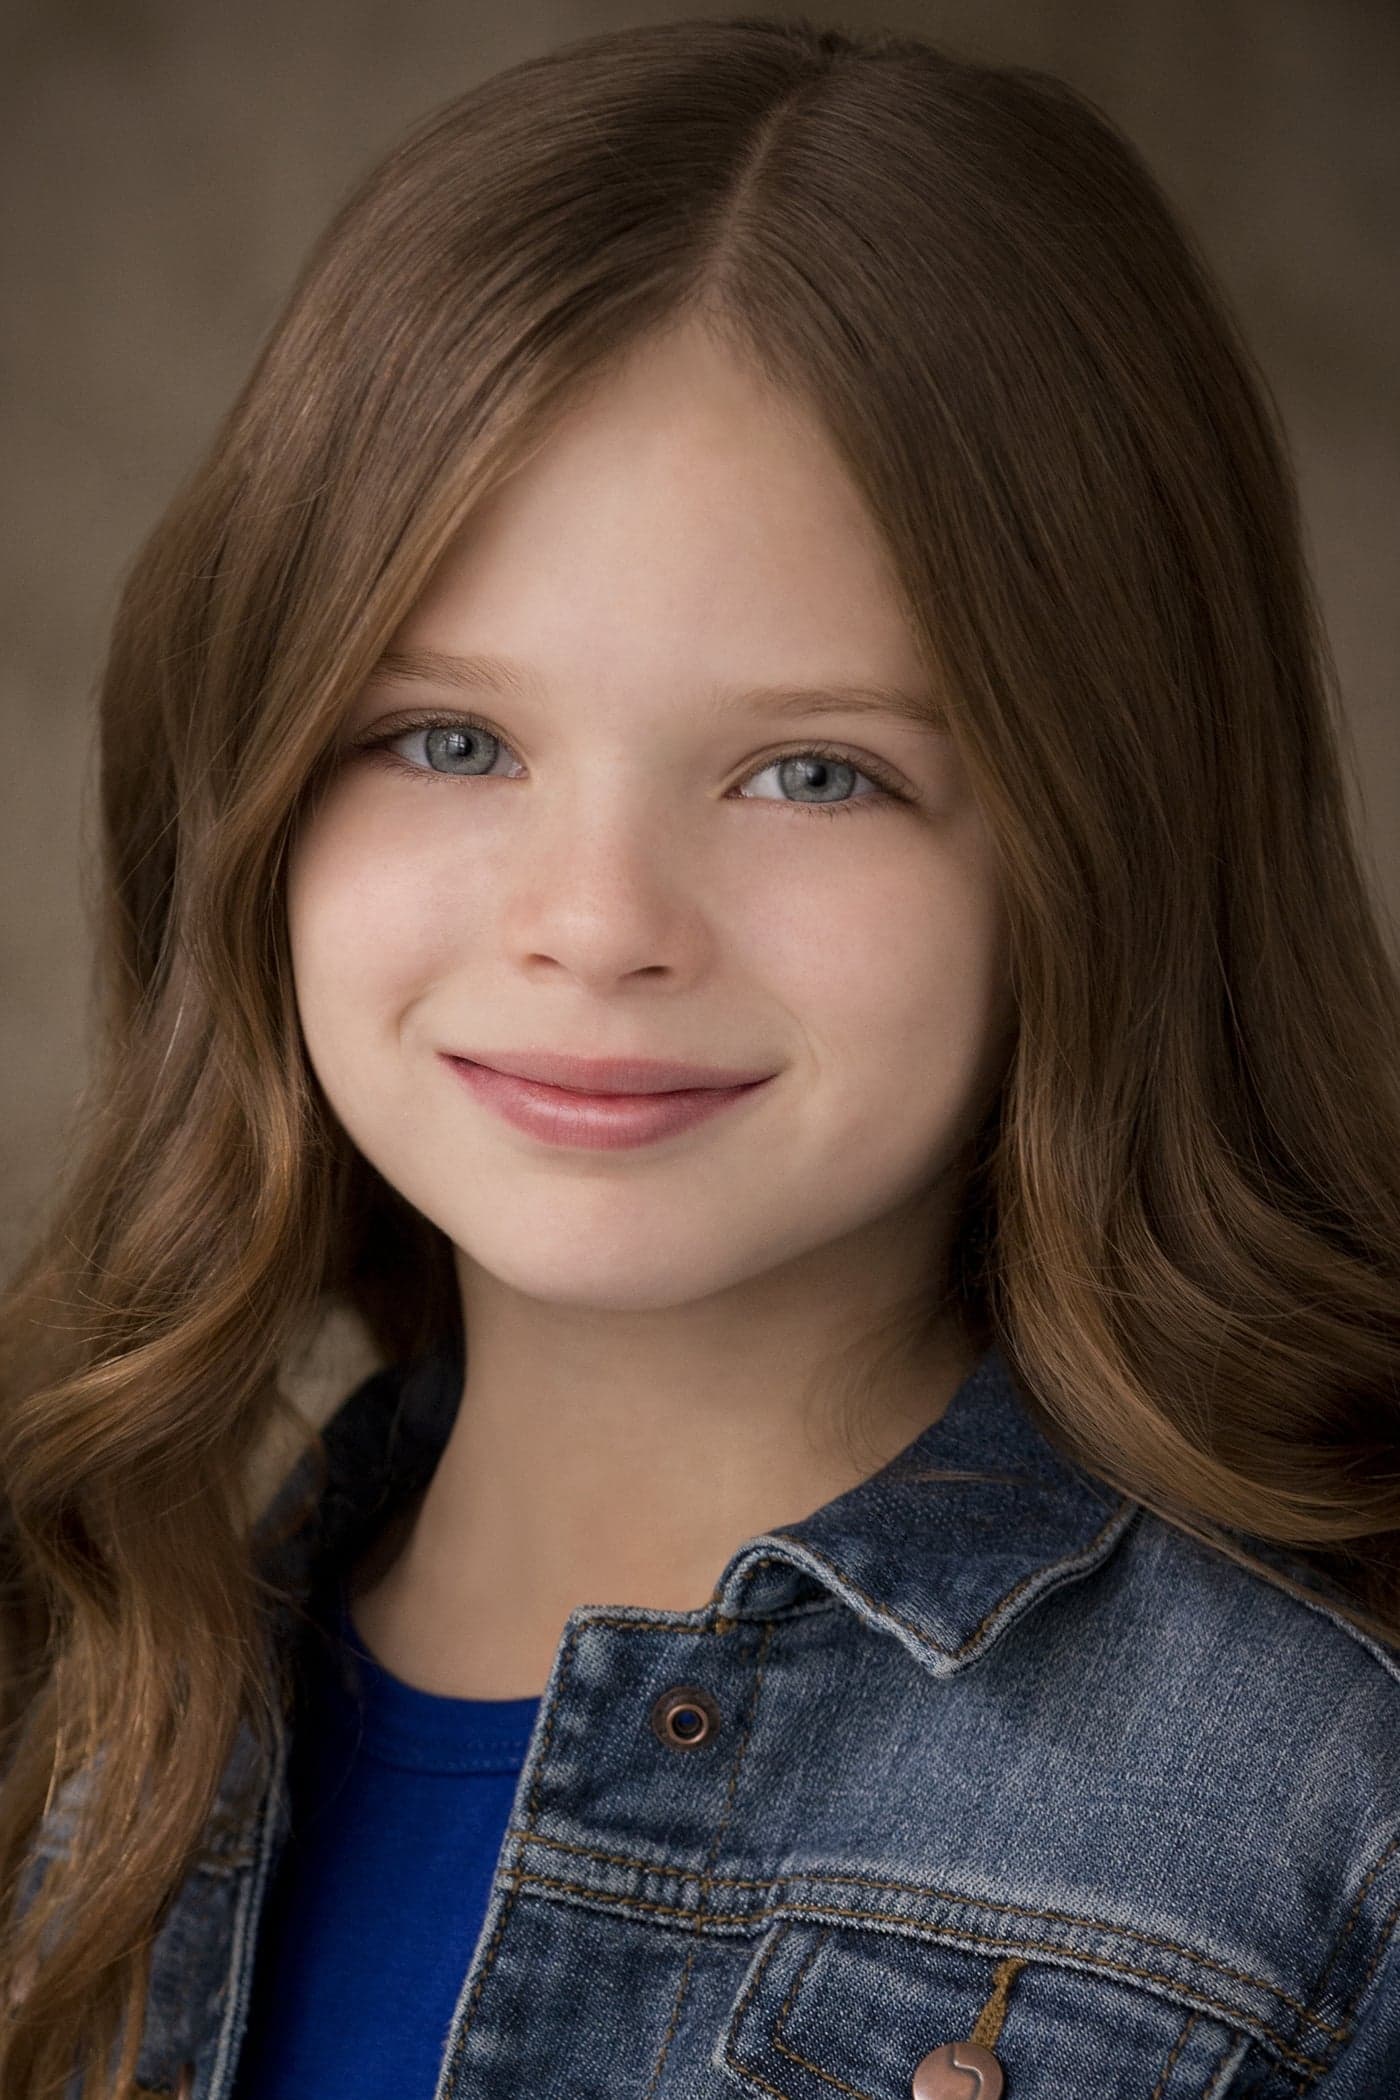 Jordana Rose | Abby (5-7 Years Old)